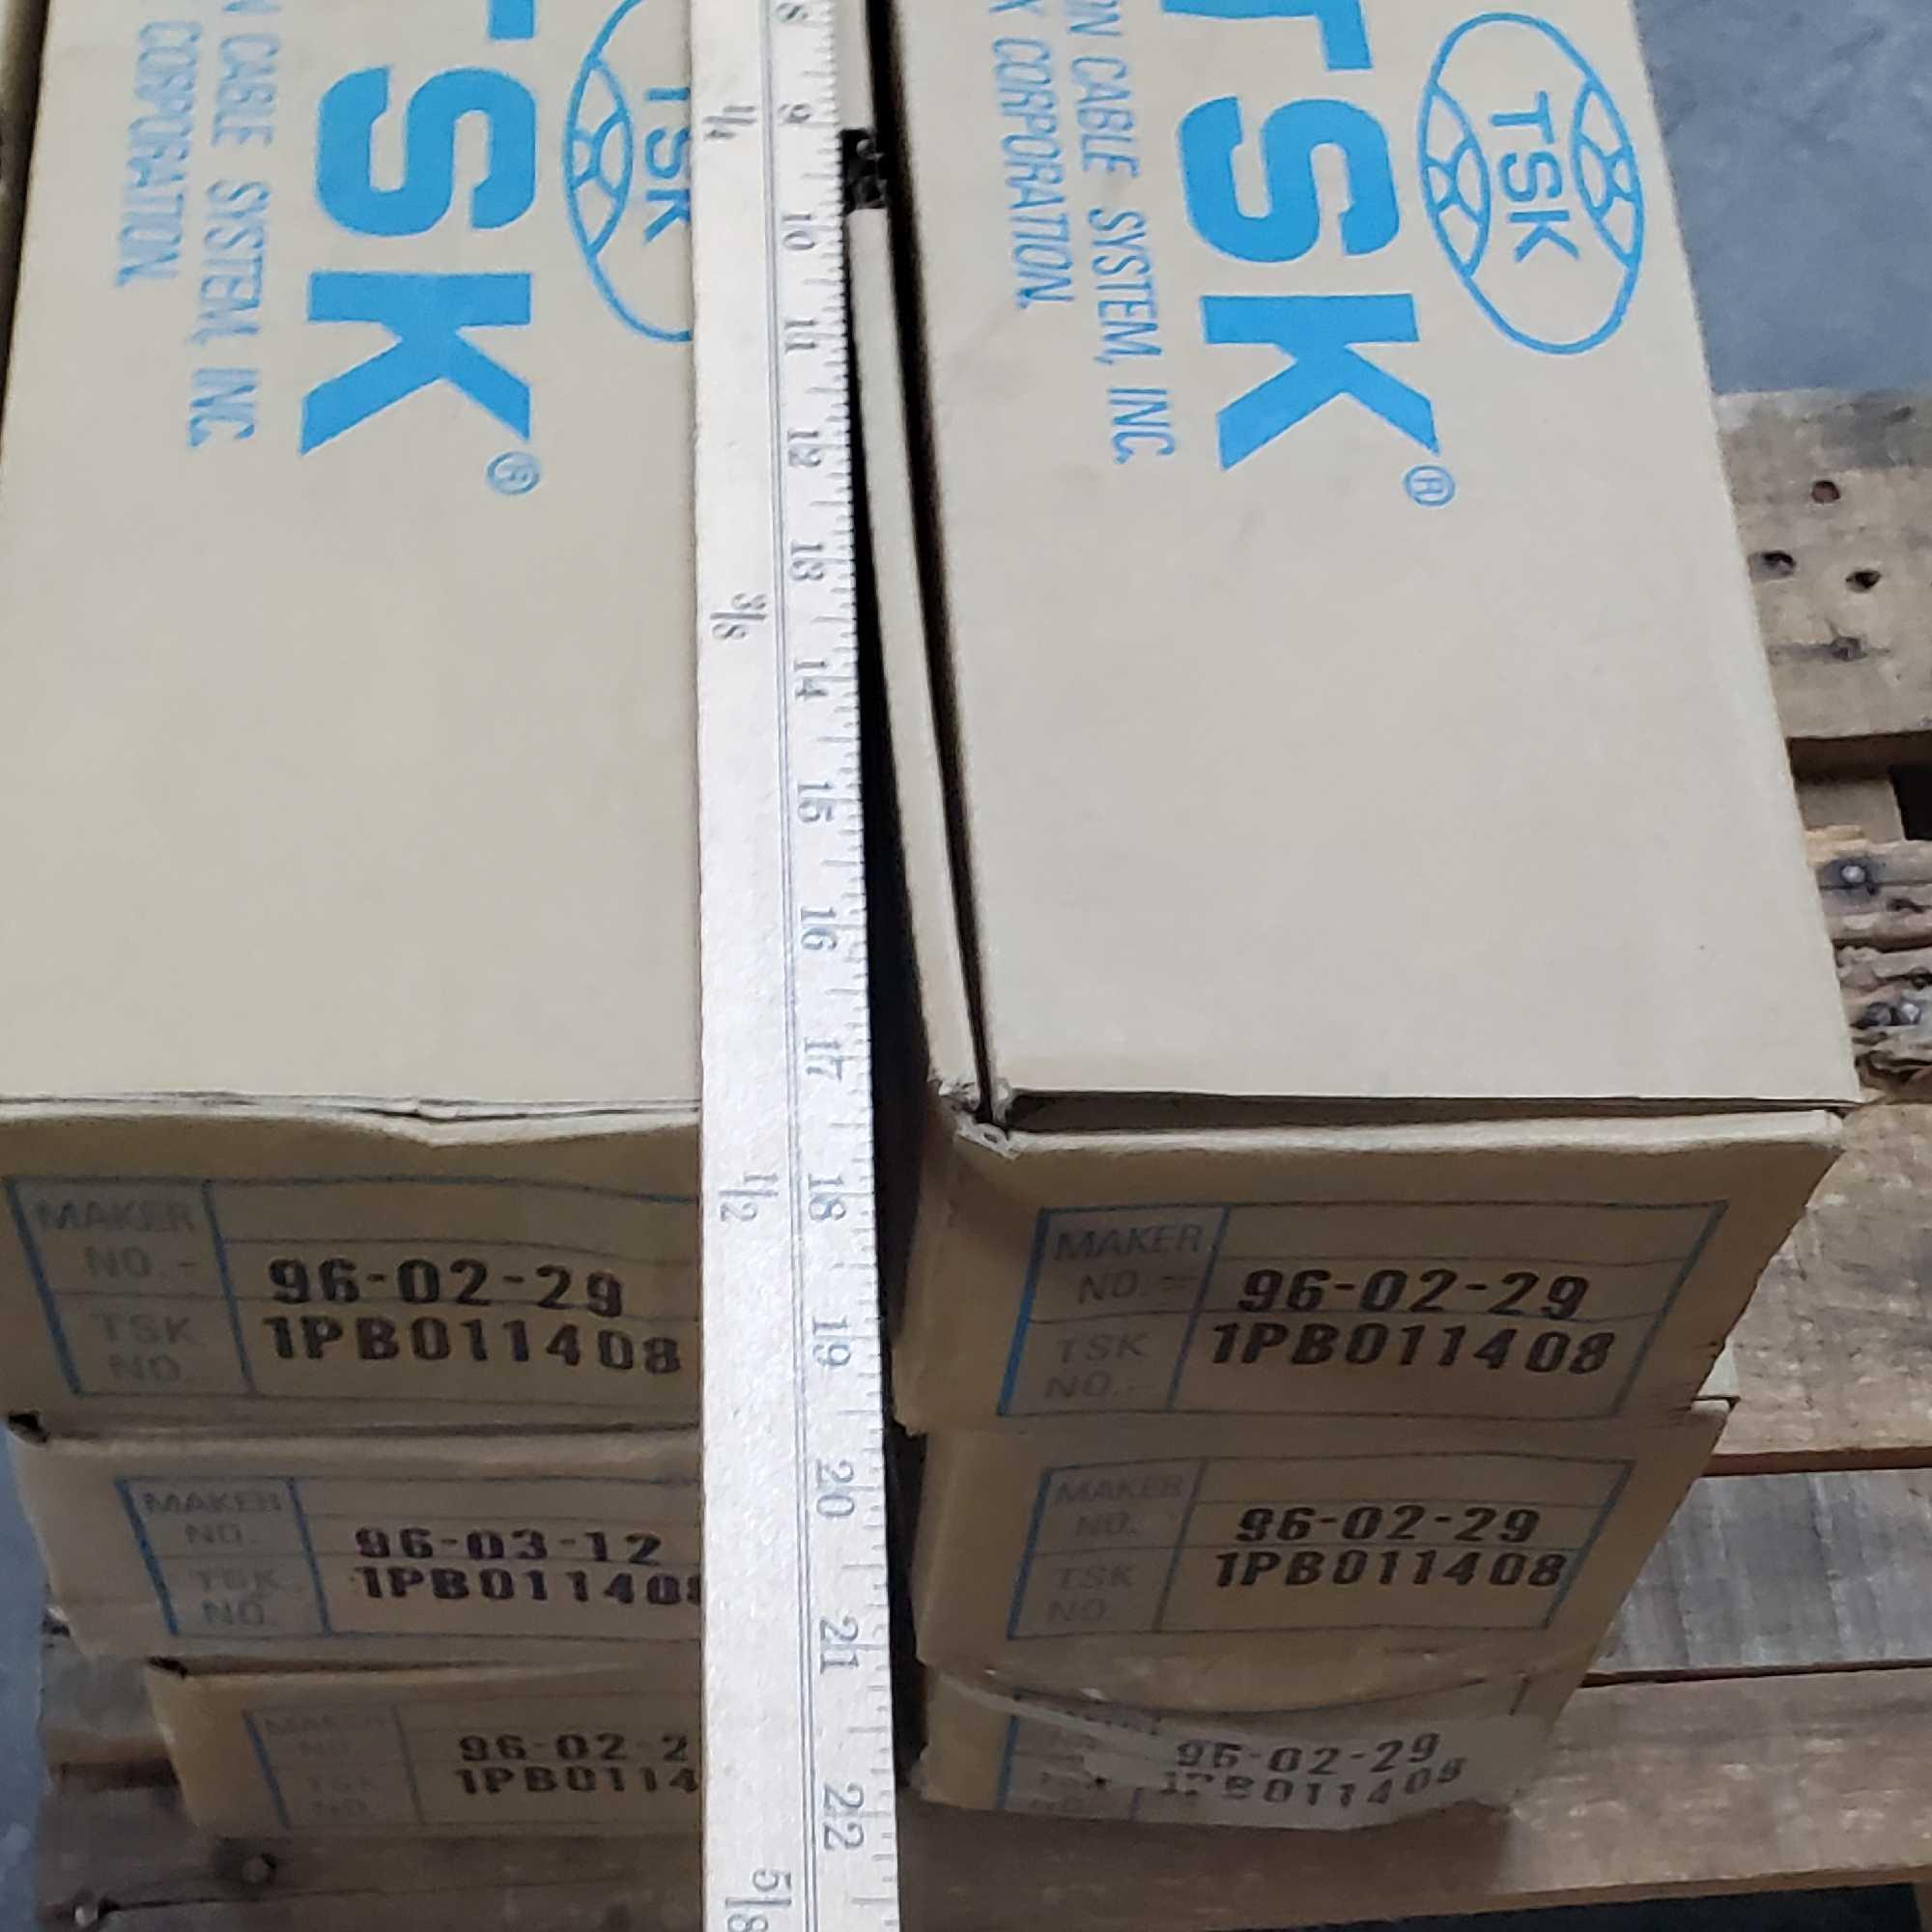 6 boxes TSK HI-LEX nippon cable systems MVT500